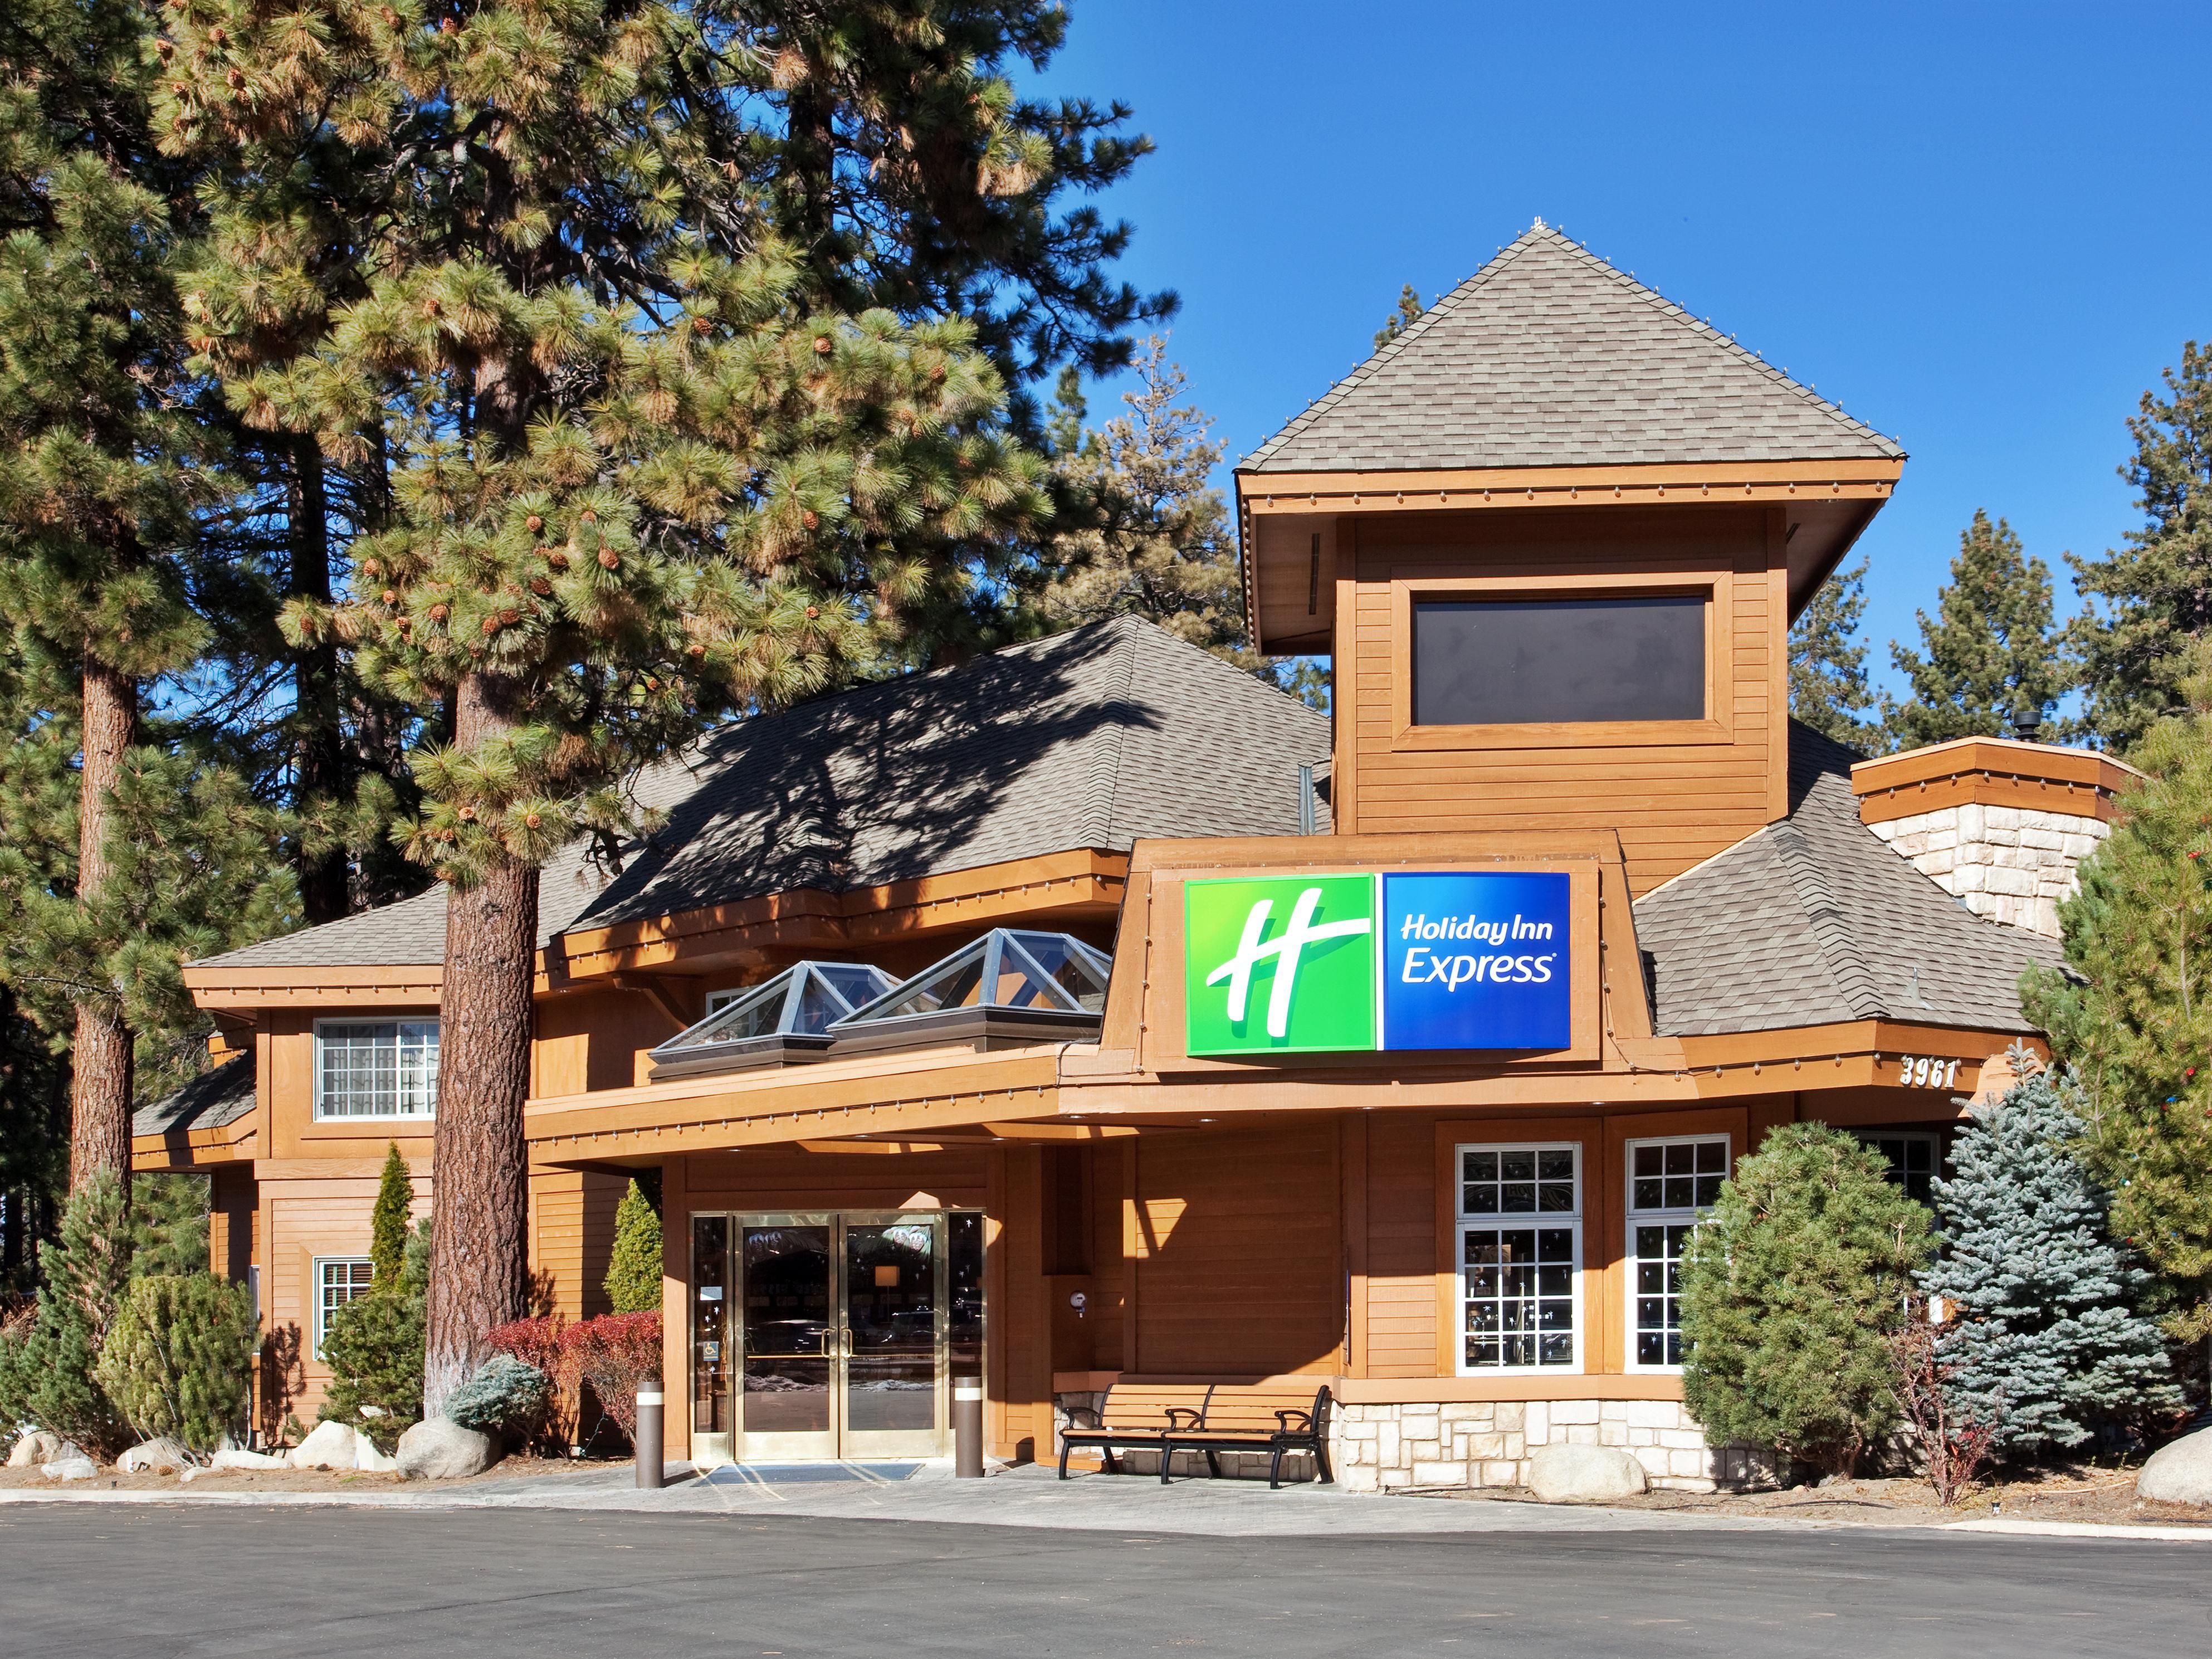 Holiday Inn Express South Lake Tahoe 2533414660 4x3